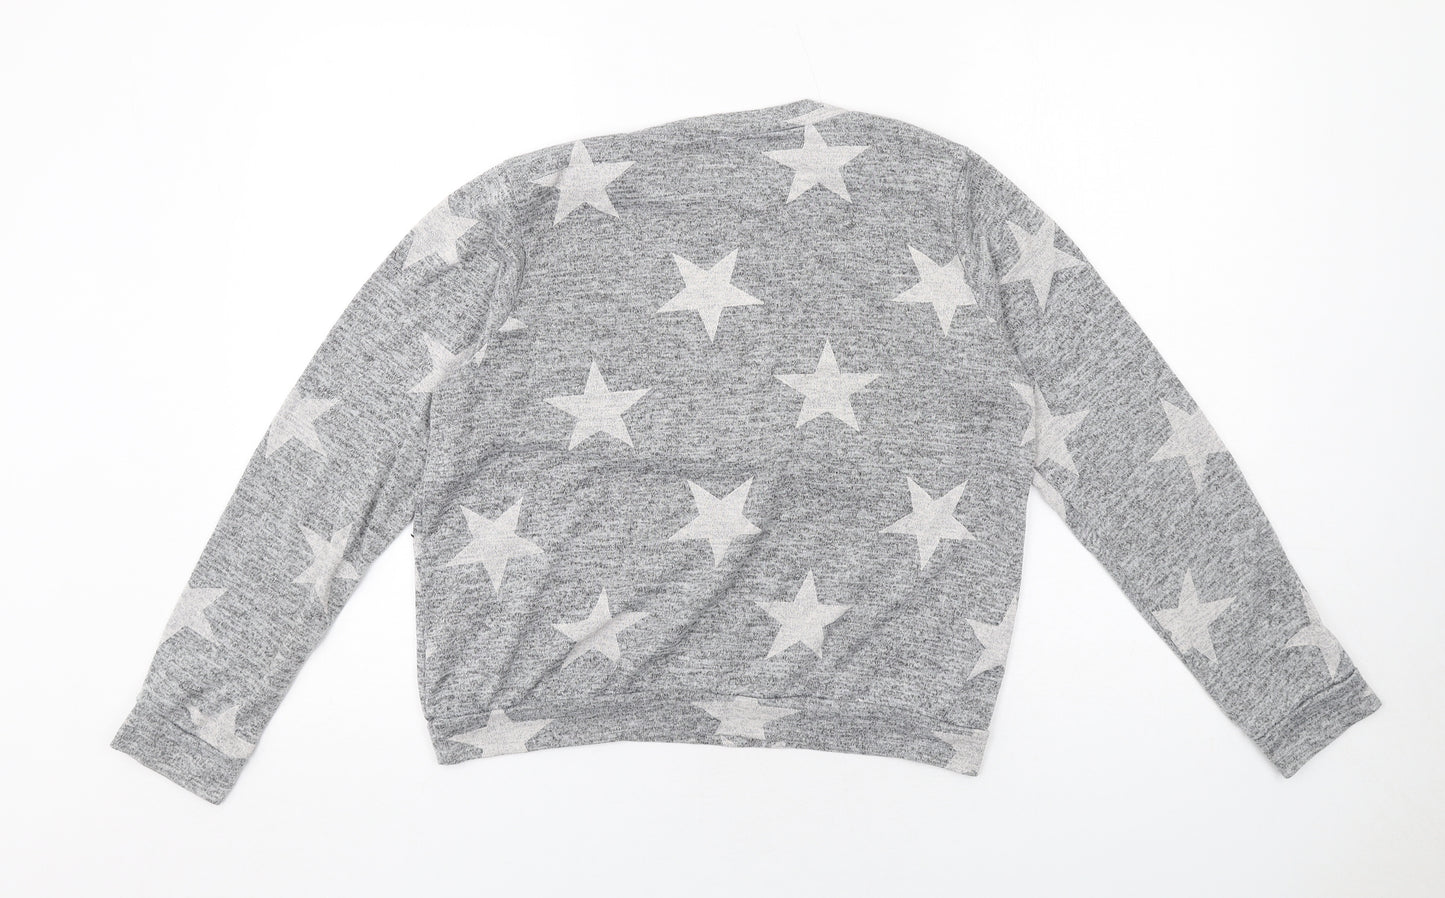 Boohoo Womens Grey Geometric Polyester Basic T-Shirt Size M Round Neck - Stars